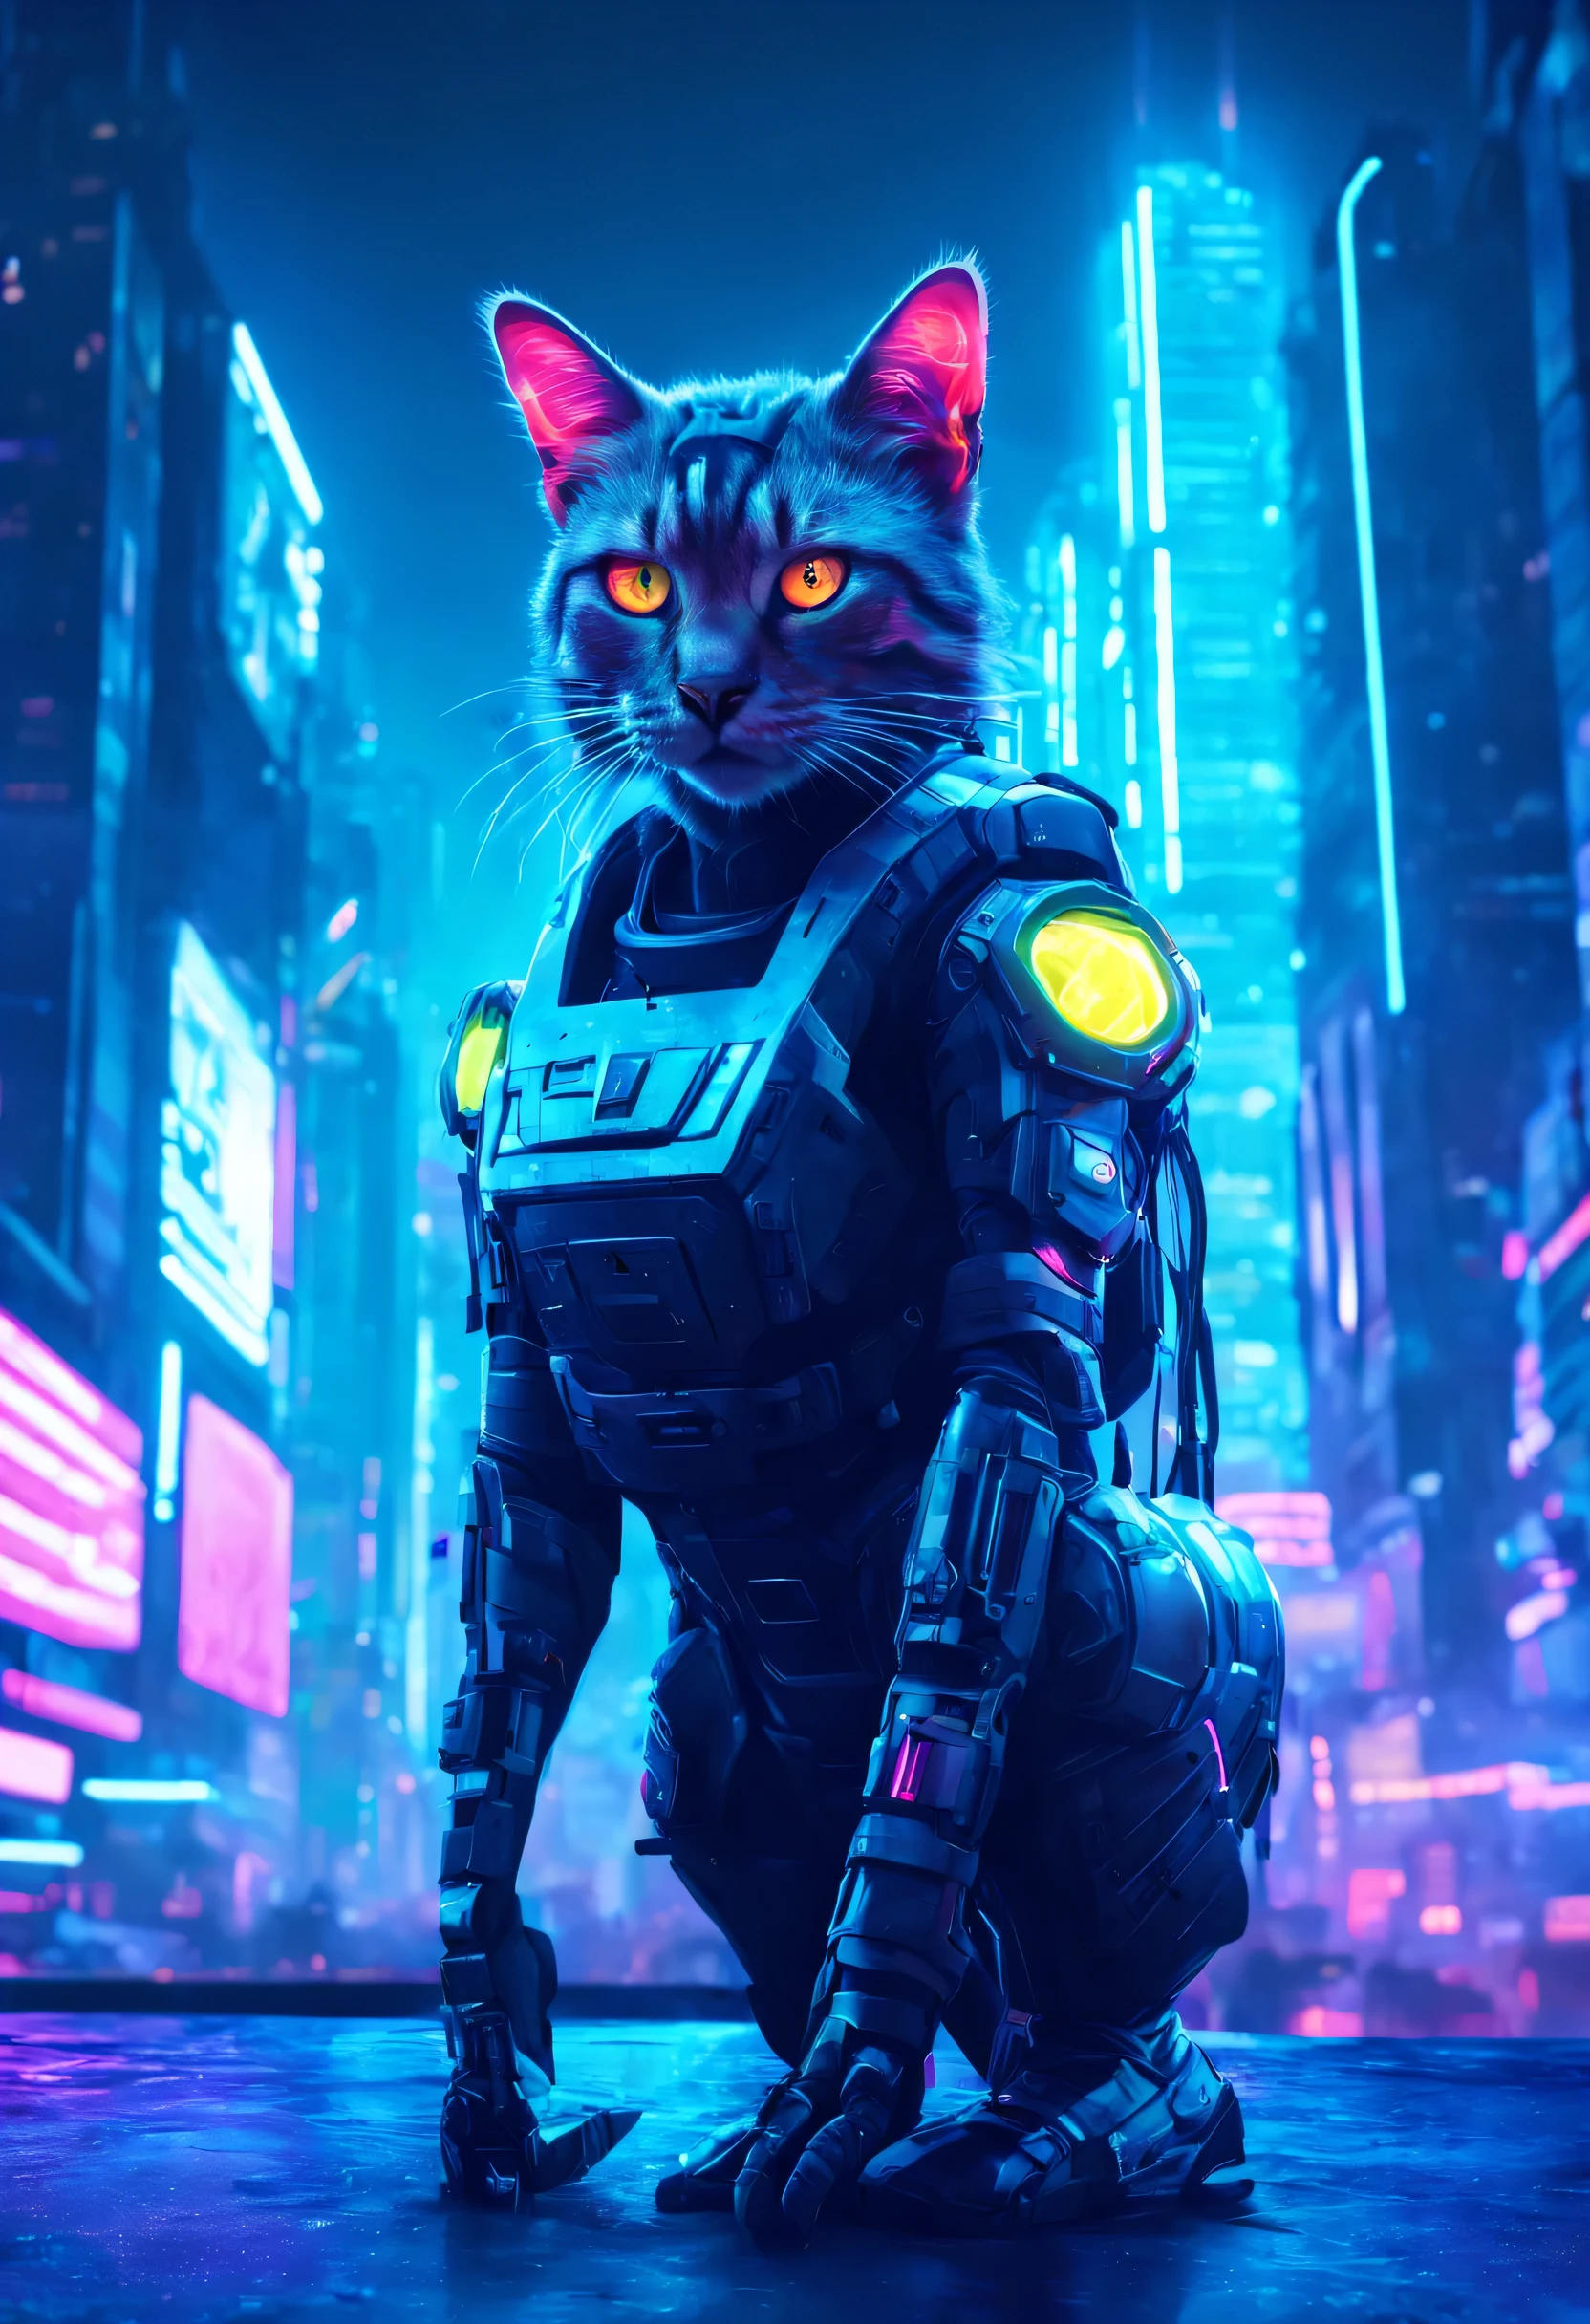 cyber cat in a futuristic city with neon lights, Master Chief em Cyberpunk City, beeple style hybrid mix, estilo de arte cyberpunk, estilo cyberpunk hiper-realista, advanced digital cyberpunk art, astronaut cyberpunk electric, not beeple style, Homem de Ferro Cyberpunk, em uma Cidade Cyberpunk Futurista, Greg Beeple, arte com tema cyberpunk, tem estilo cyberpunk, Cyberpunk scifi